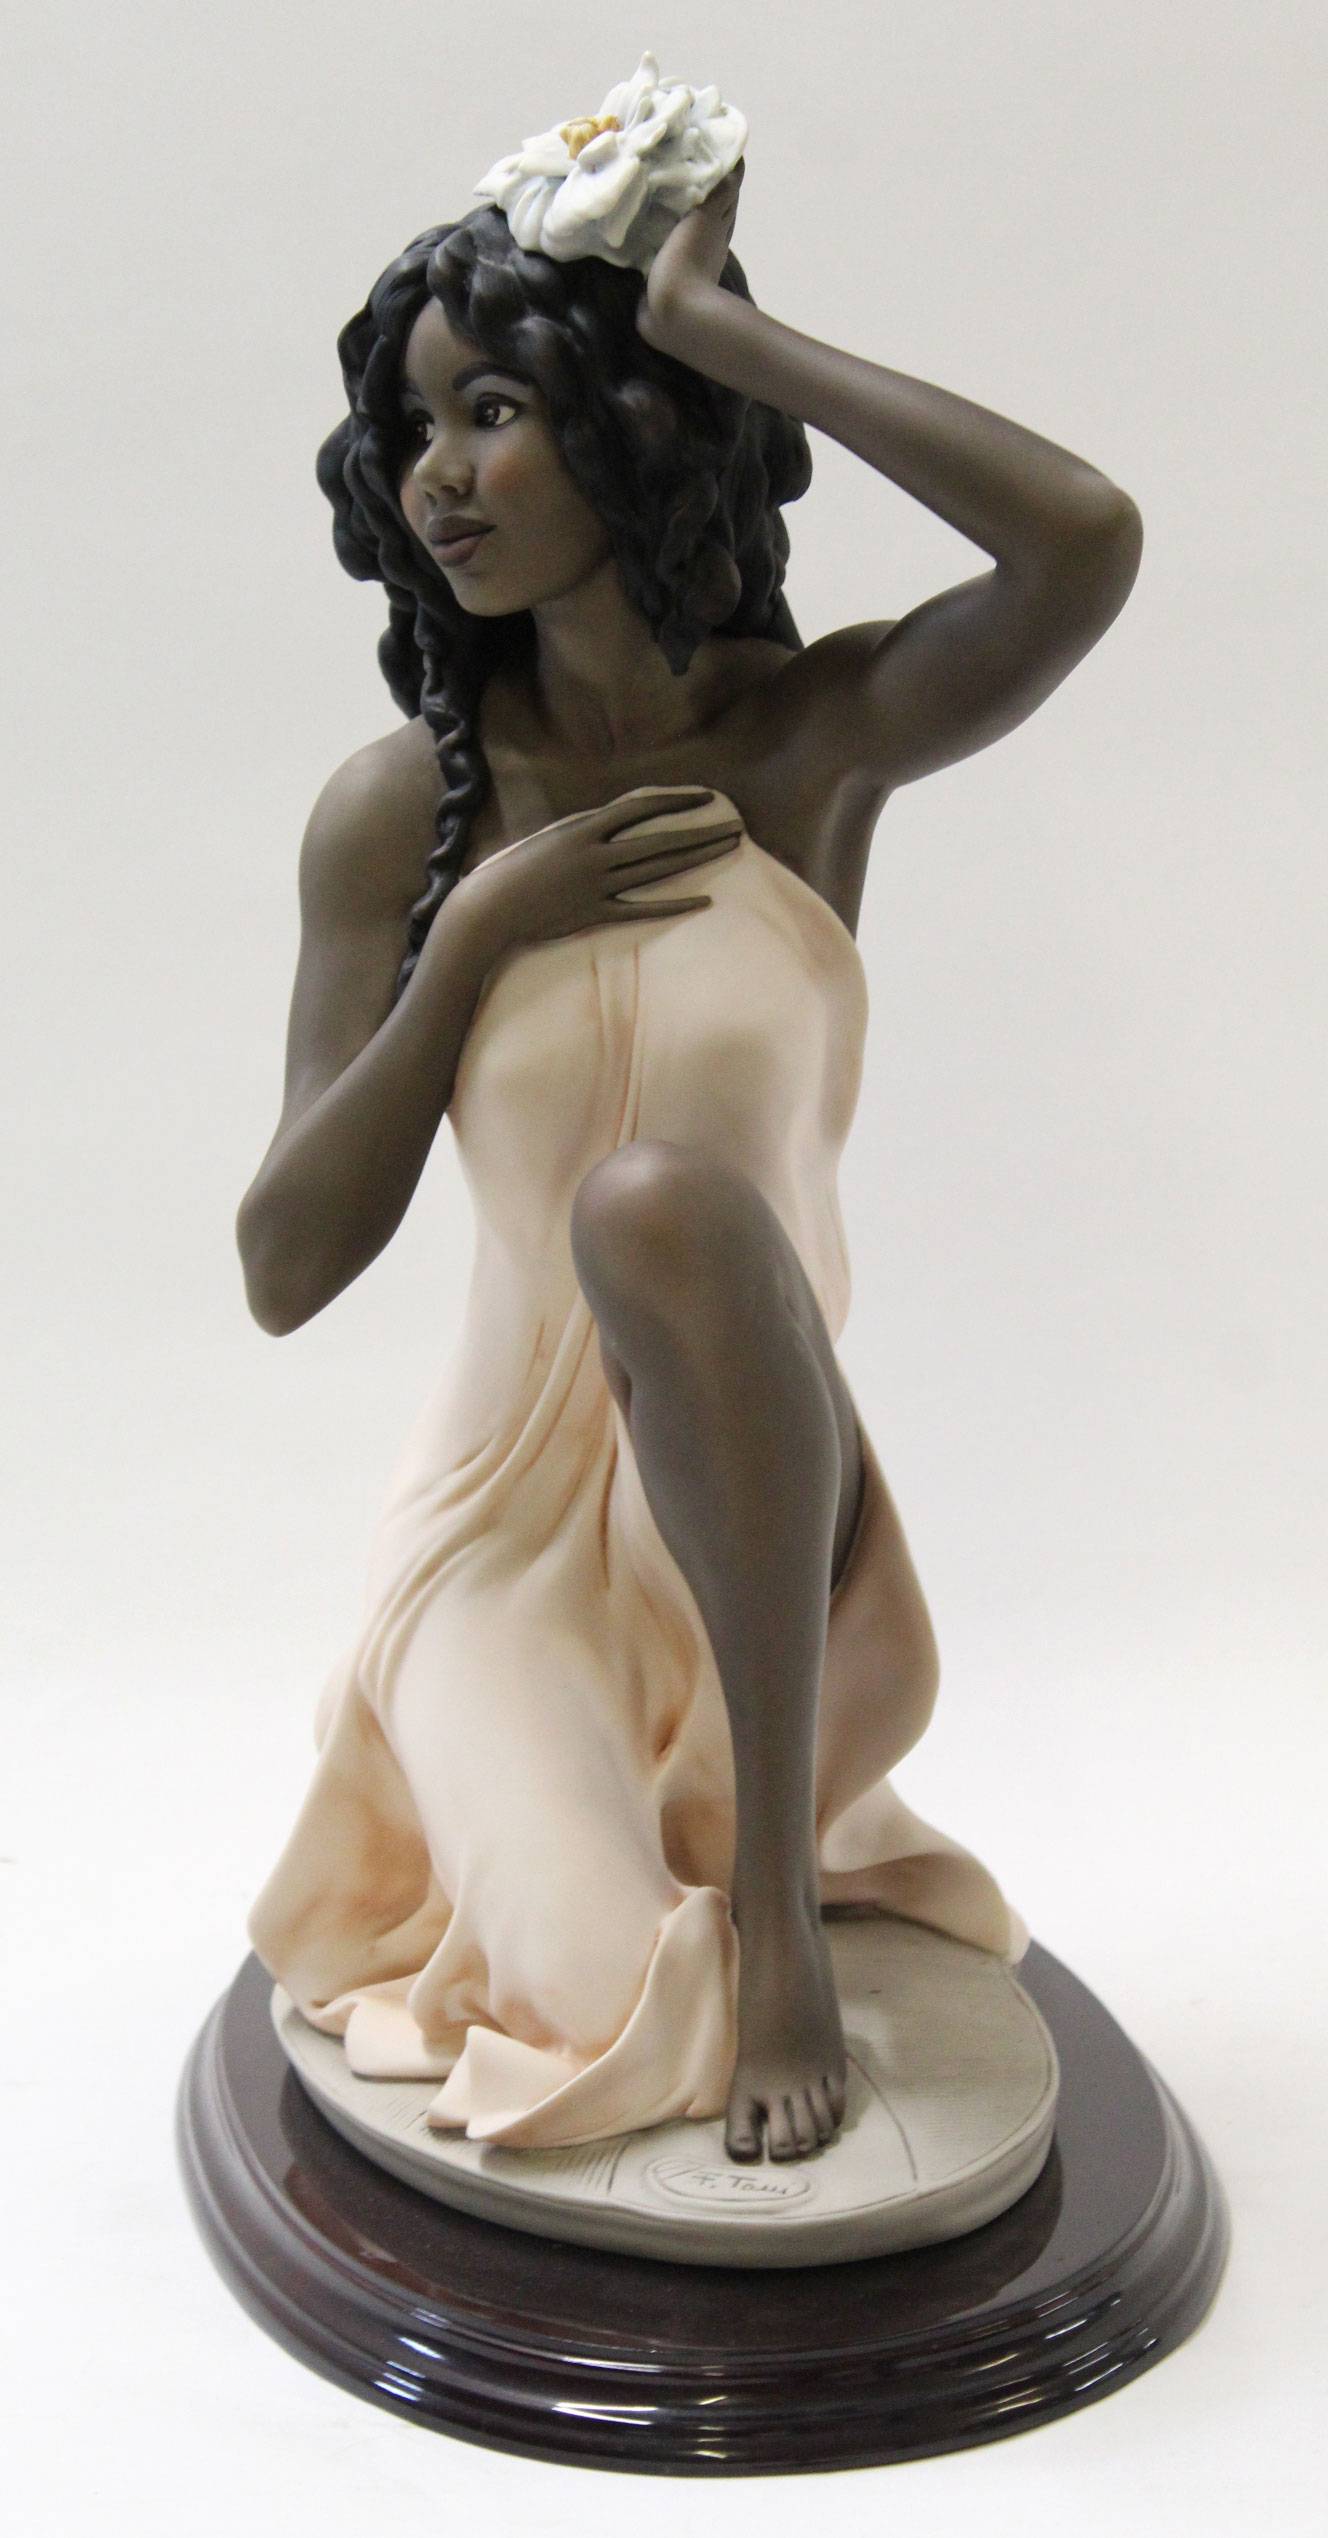 Galleria, Florence Studio, limited edition, (190/1500) ceramic figure, "F Taui", 49cm high - Image 2 of 6